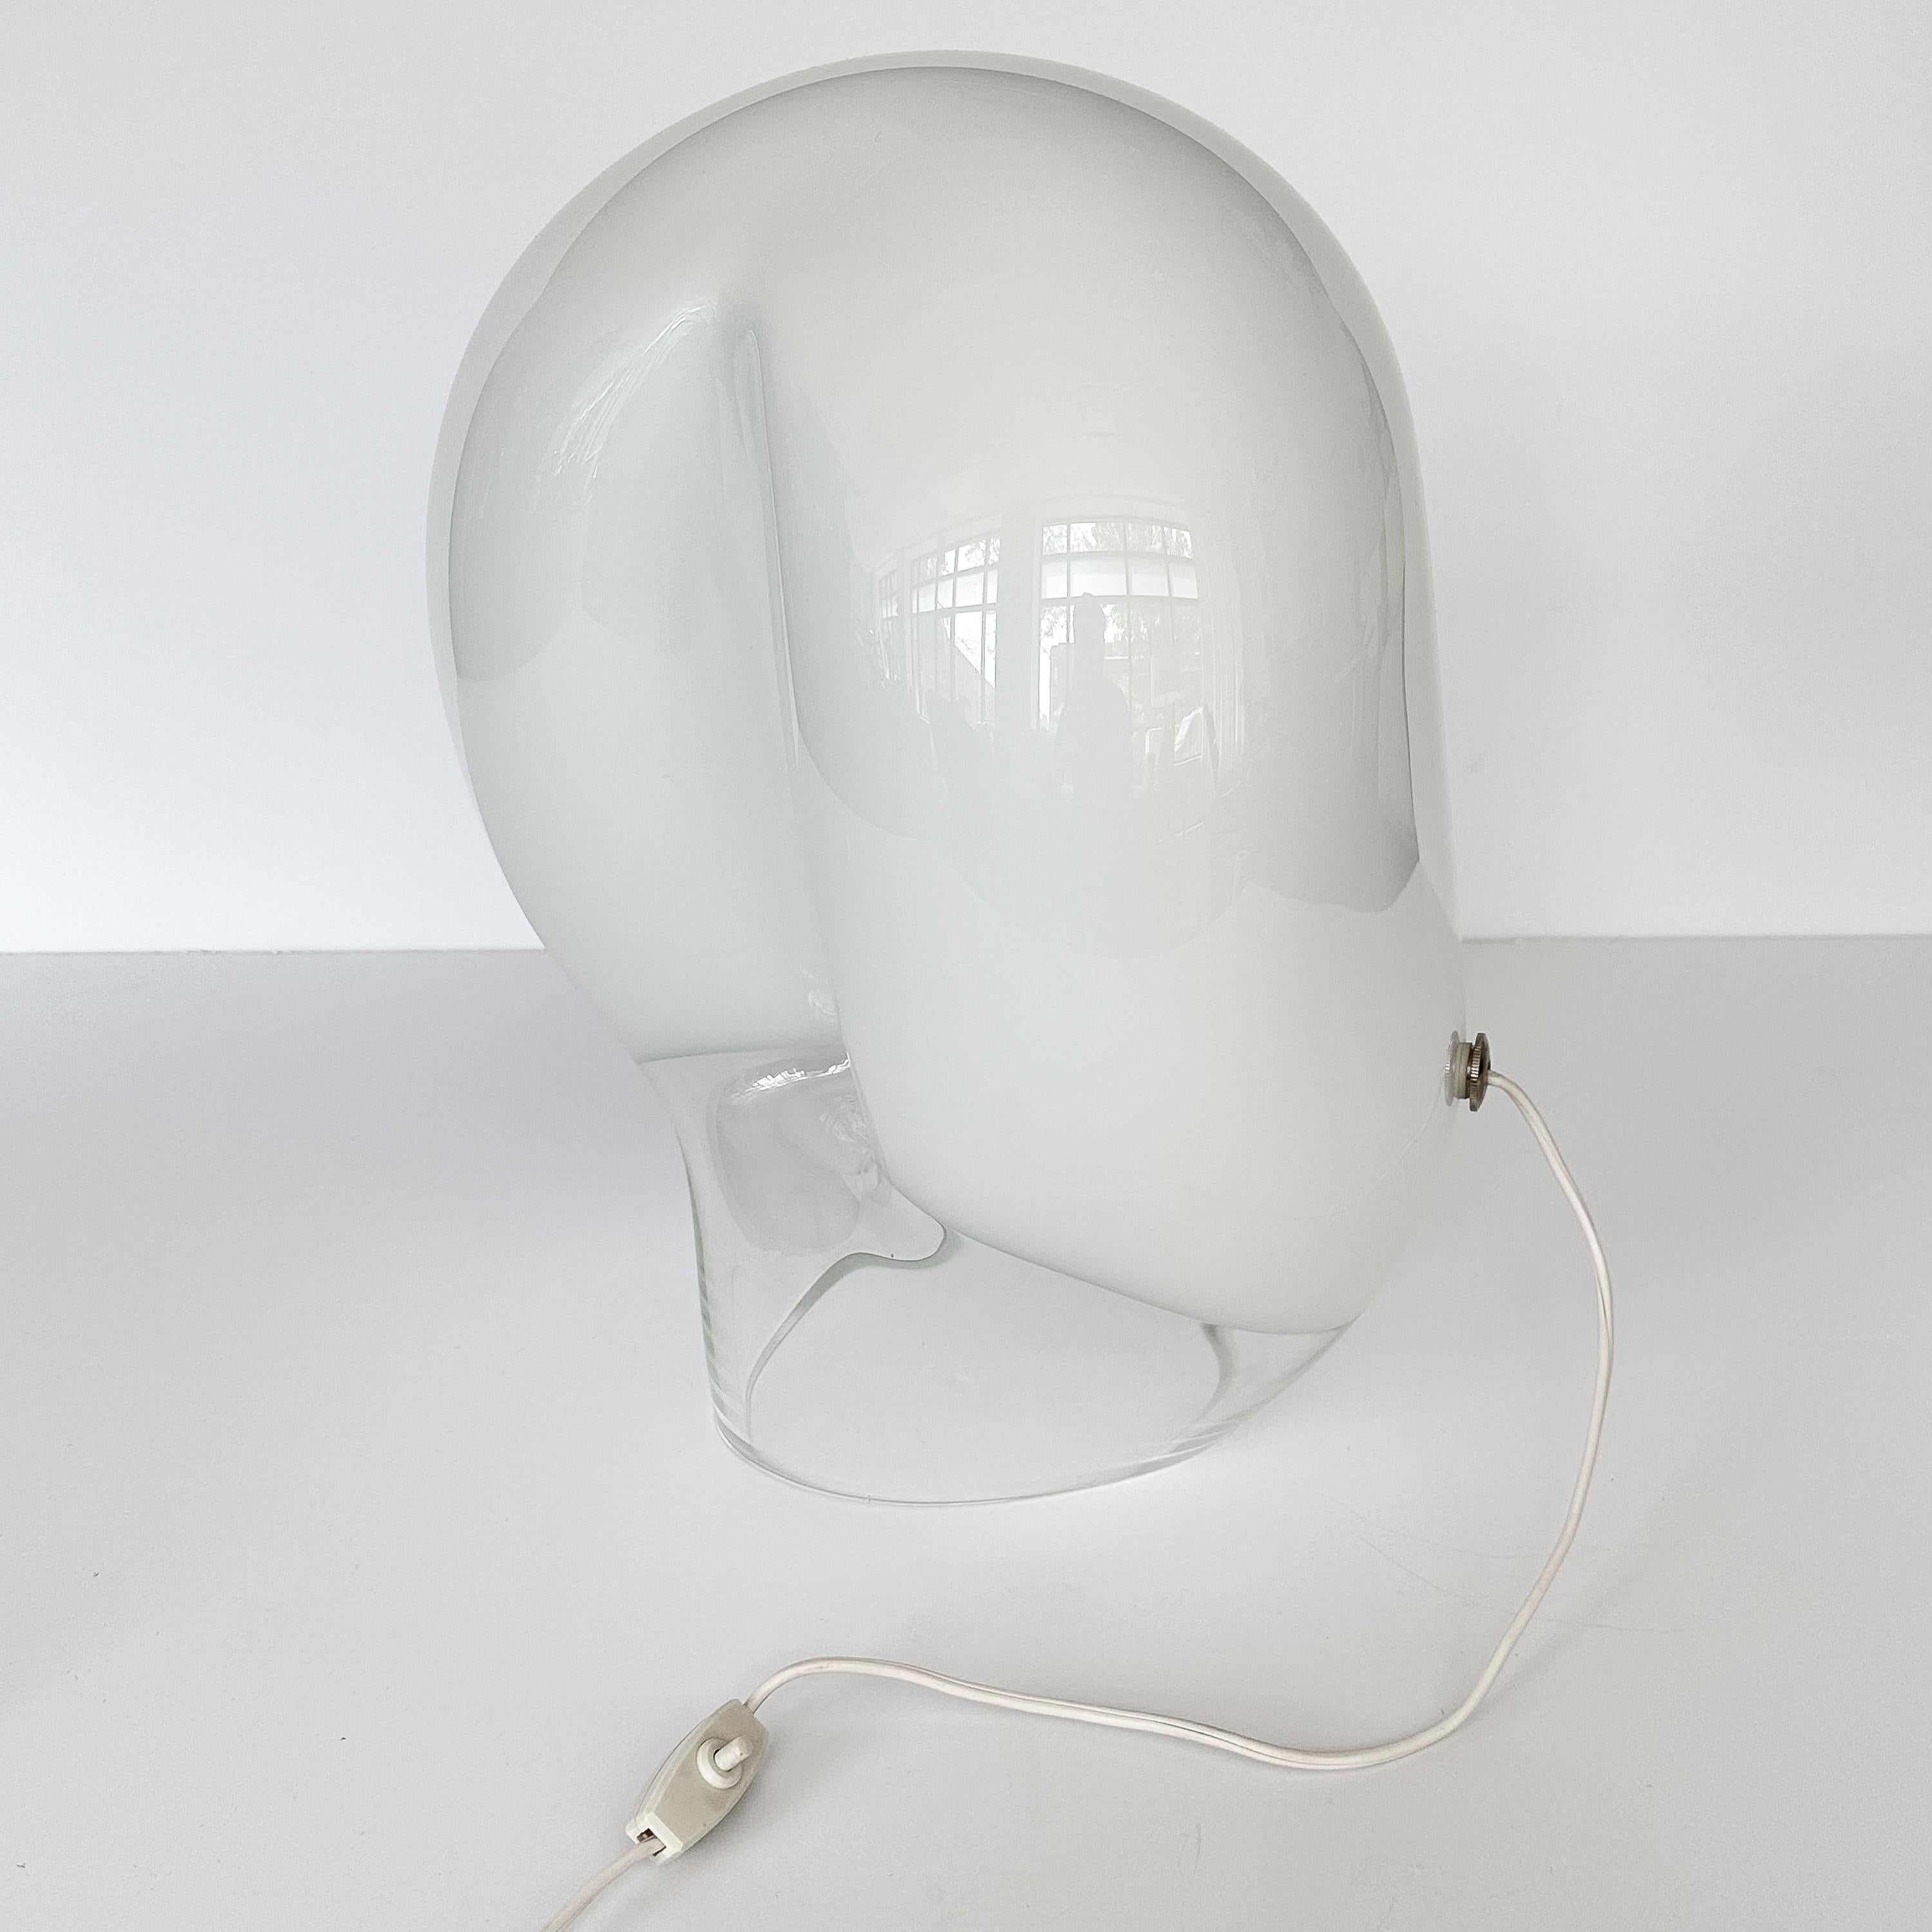 Vistosi Zago Table Lamp Model L282g by Gino Vistosi 5